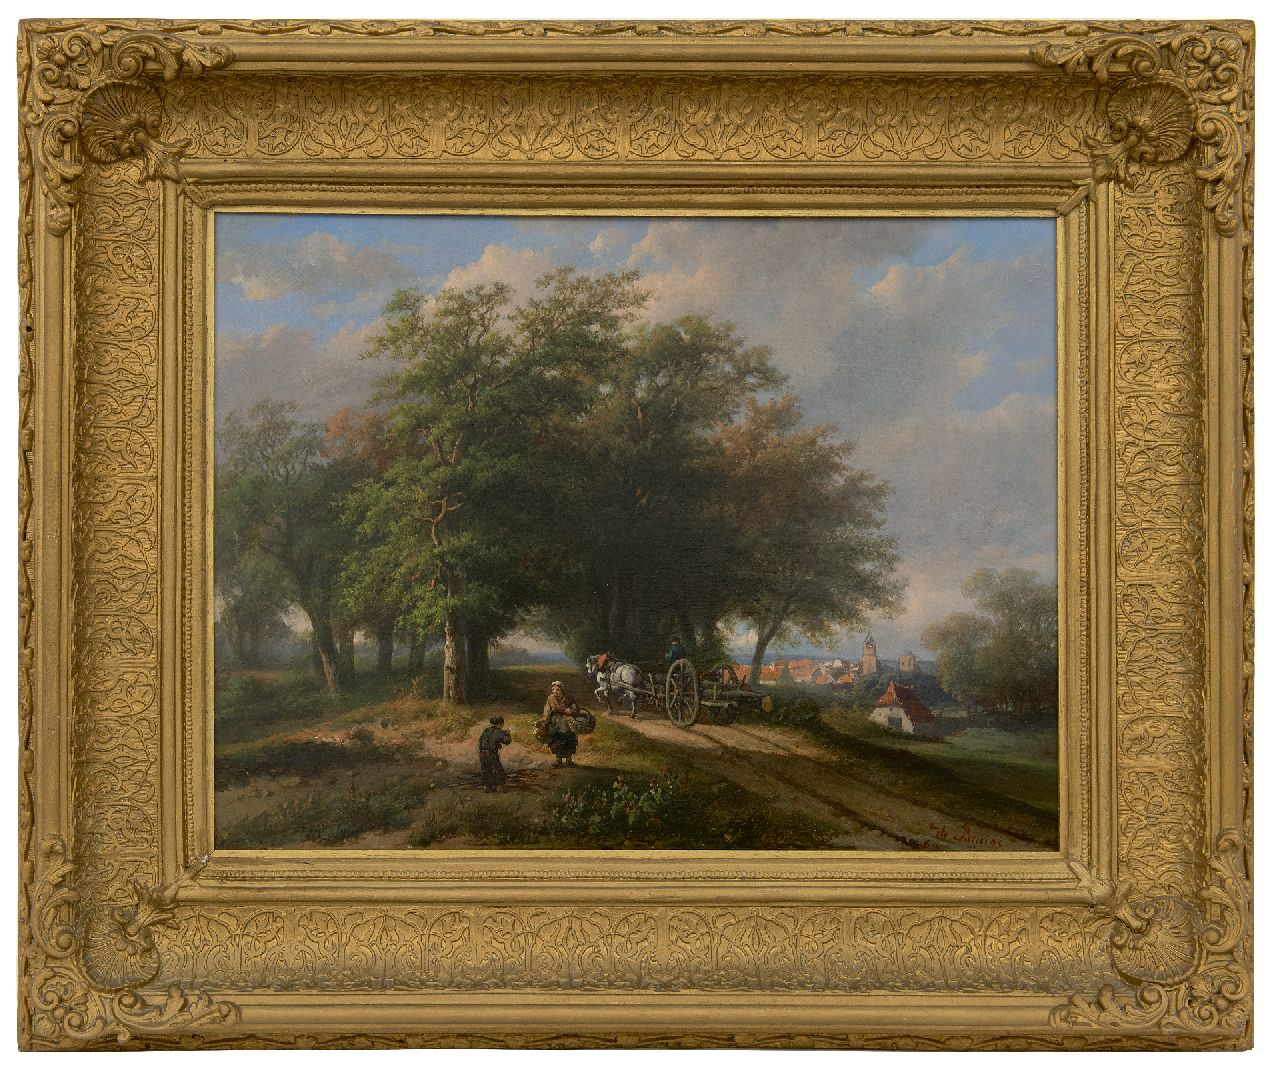 Bruïne A.H. de | Adrianus Hendrikus de Bruïne | Paintings offered for sale | Land folk on a sunny country road, oil on panel 35.8 x 47.9 cm, signed l.r.